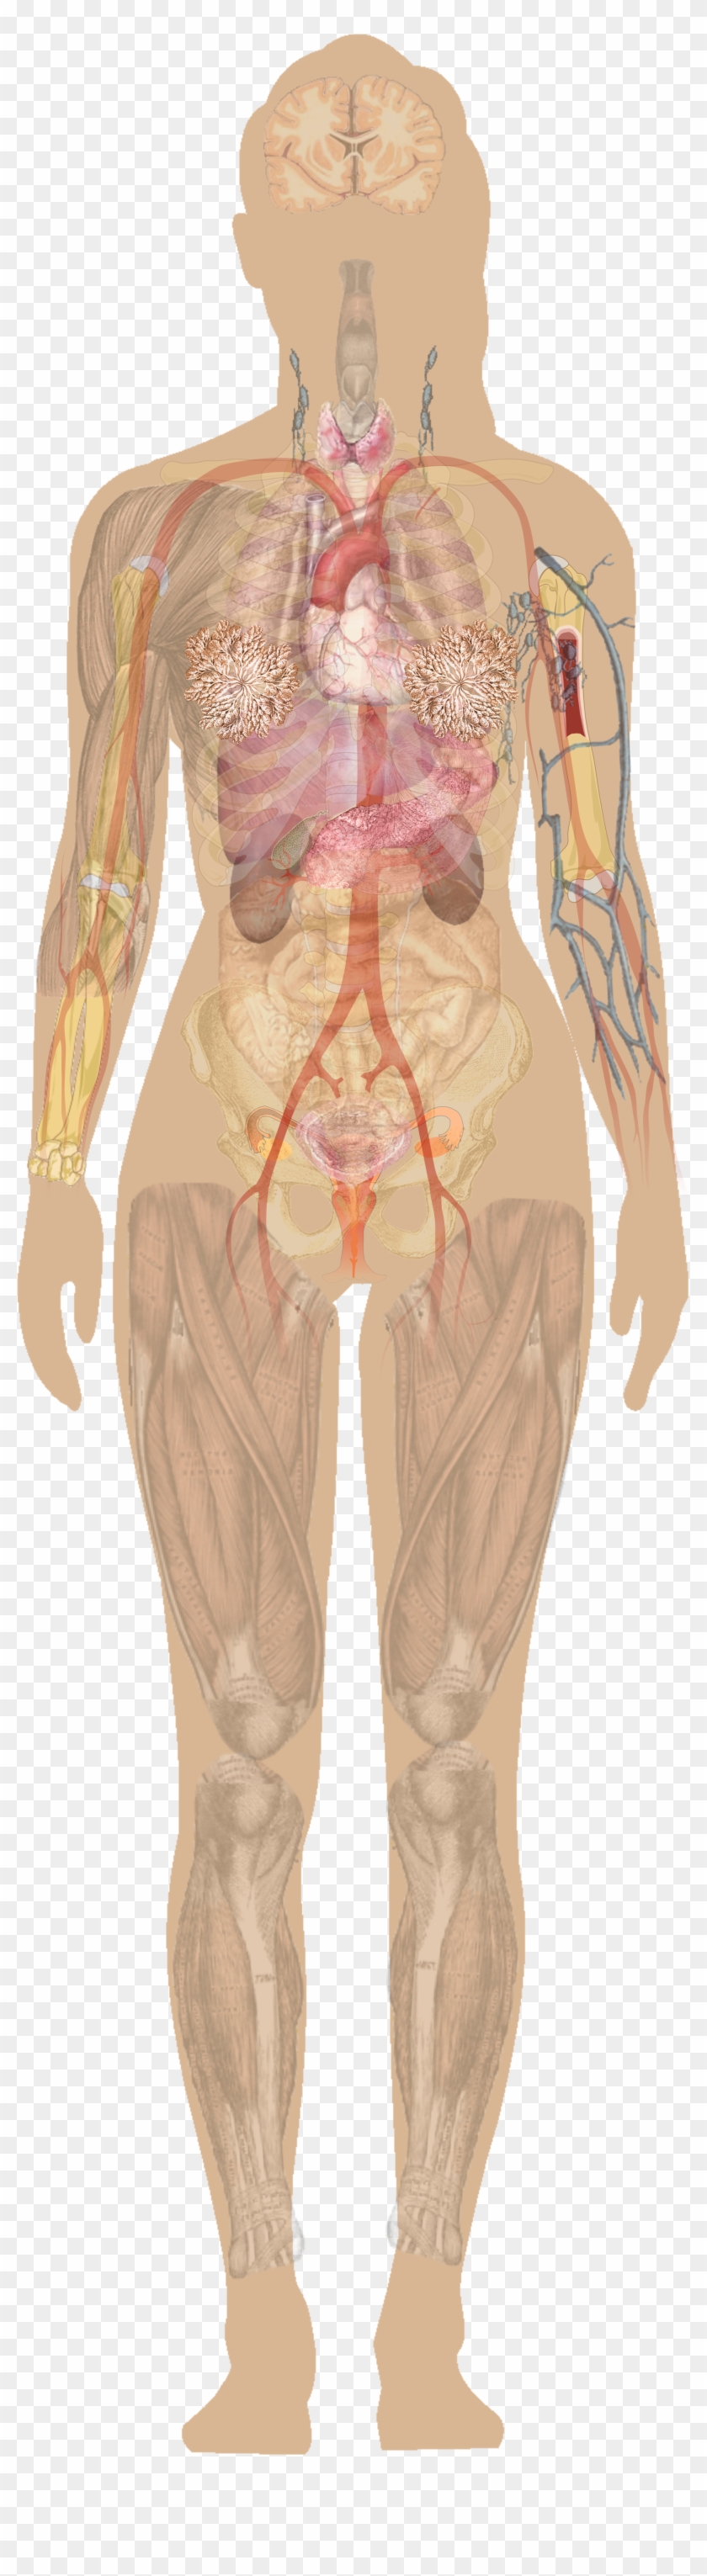 Female Chest Anatomy Diagram Female Human Anatomy Human Anatomy Organs No Labels Clipart 4109042 Pikpng